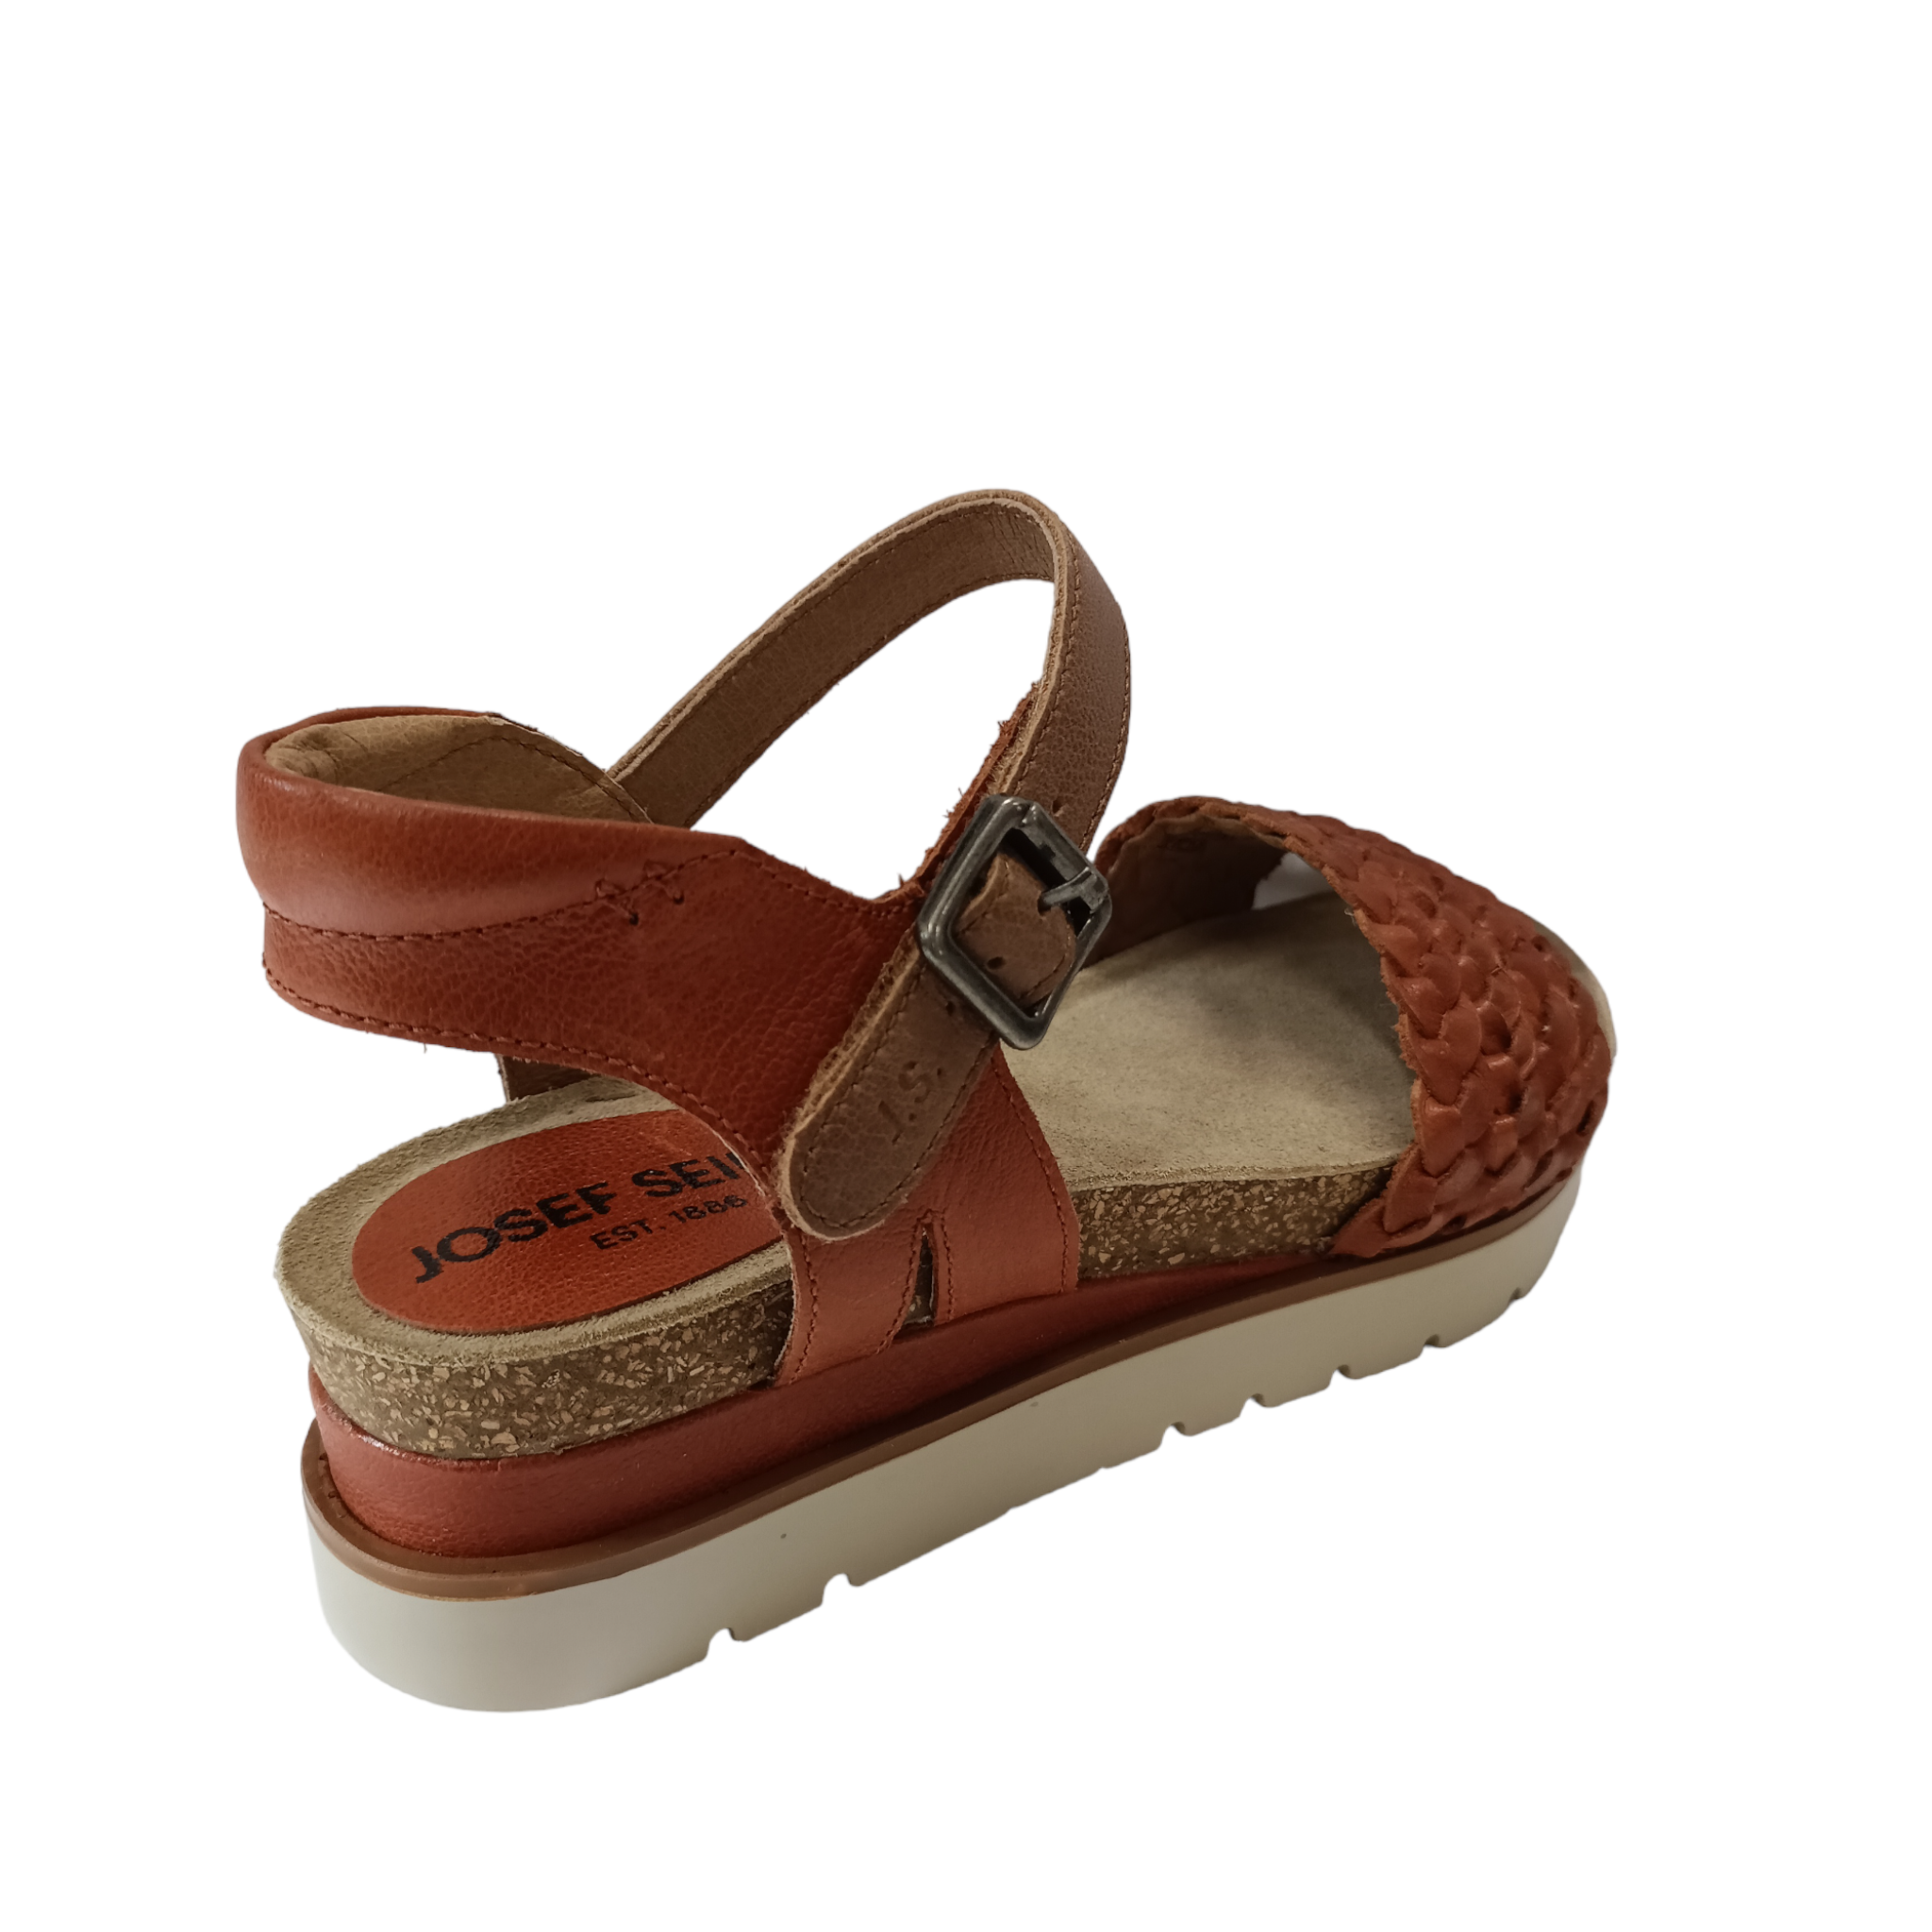 Clea 16 - shoe&amp;me - Josef Seibel - Sandal - Sandals, Summer, Wedges, Womens